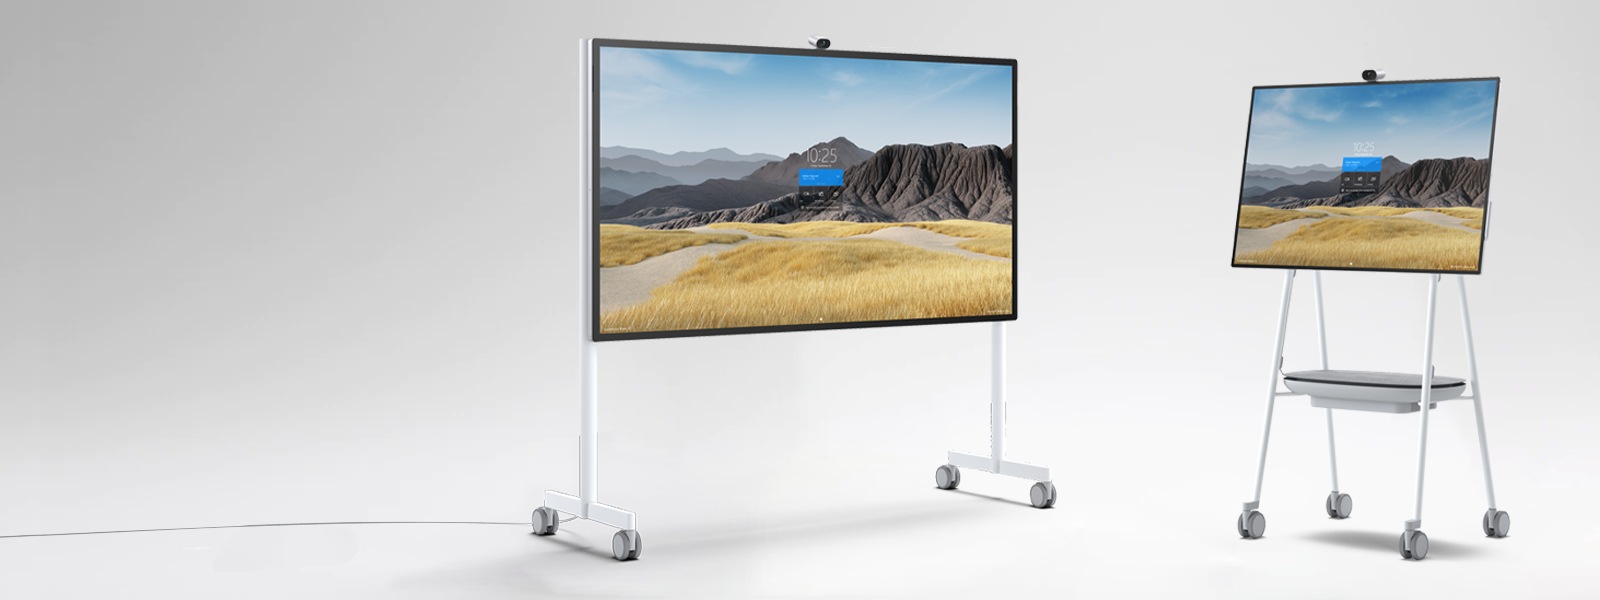 Surface Hub 2S에 대해 자세히 알아보기